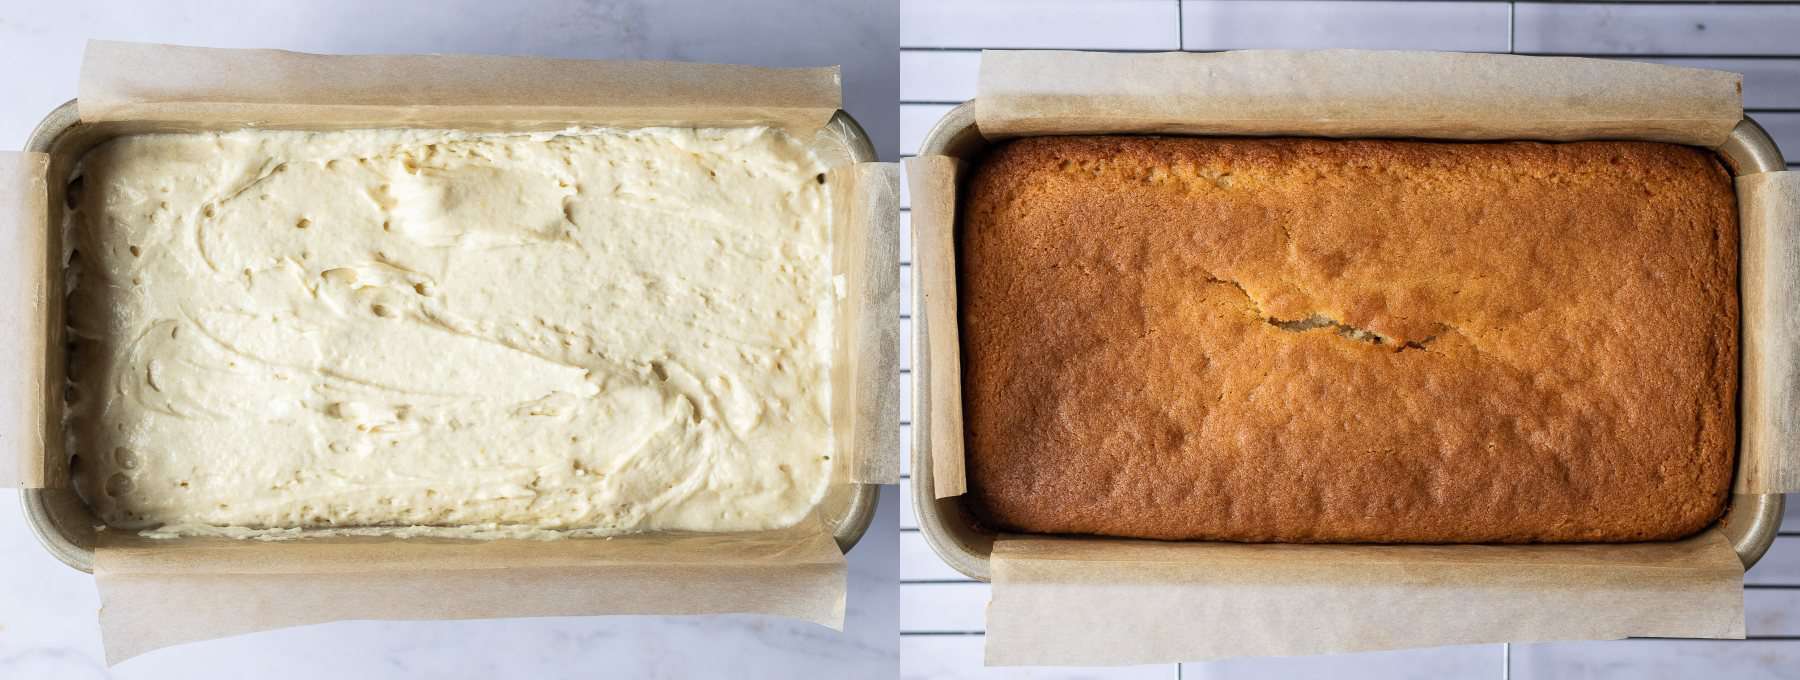 step 3 - baking the cake